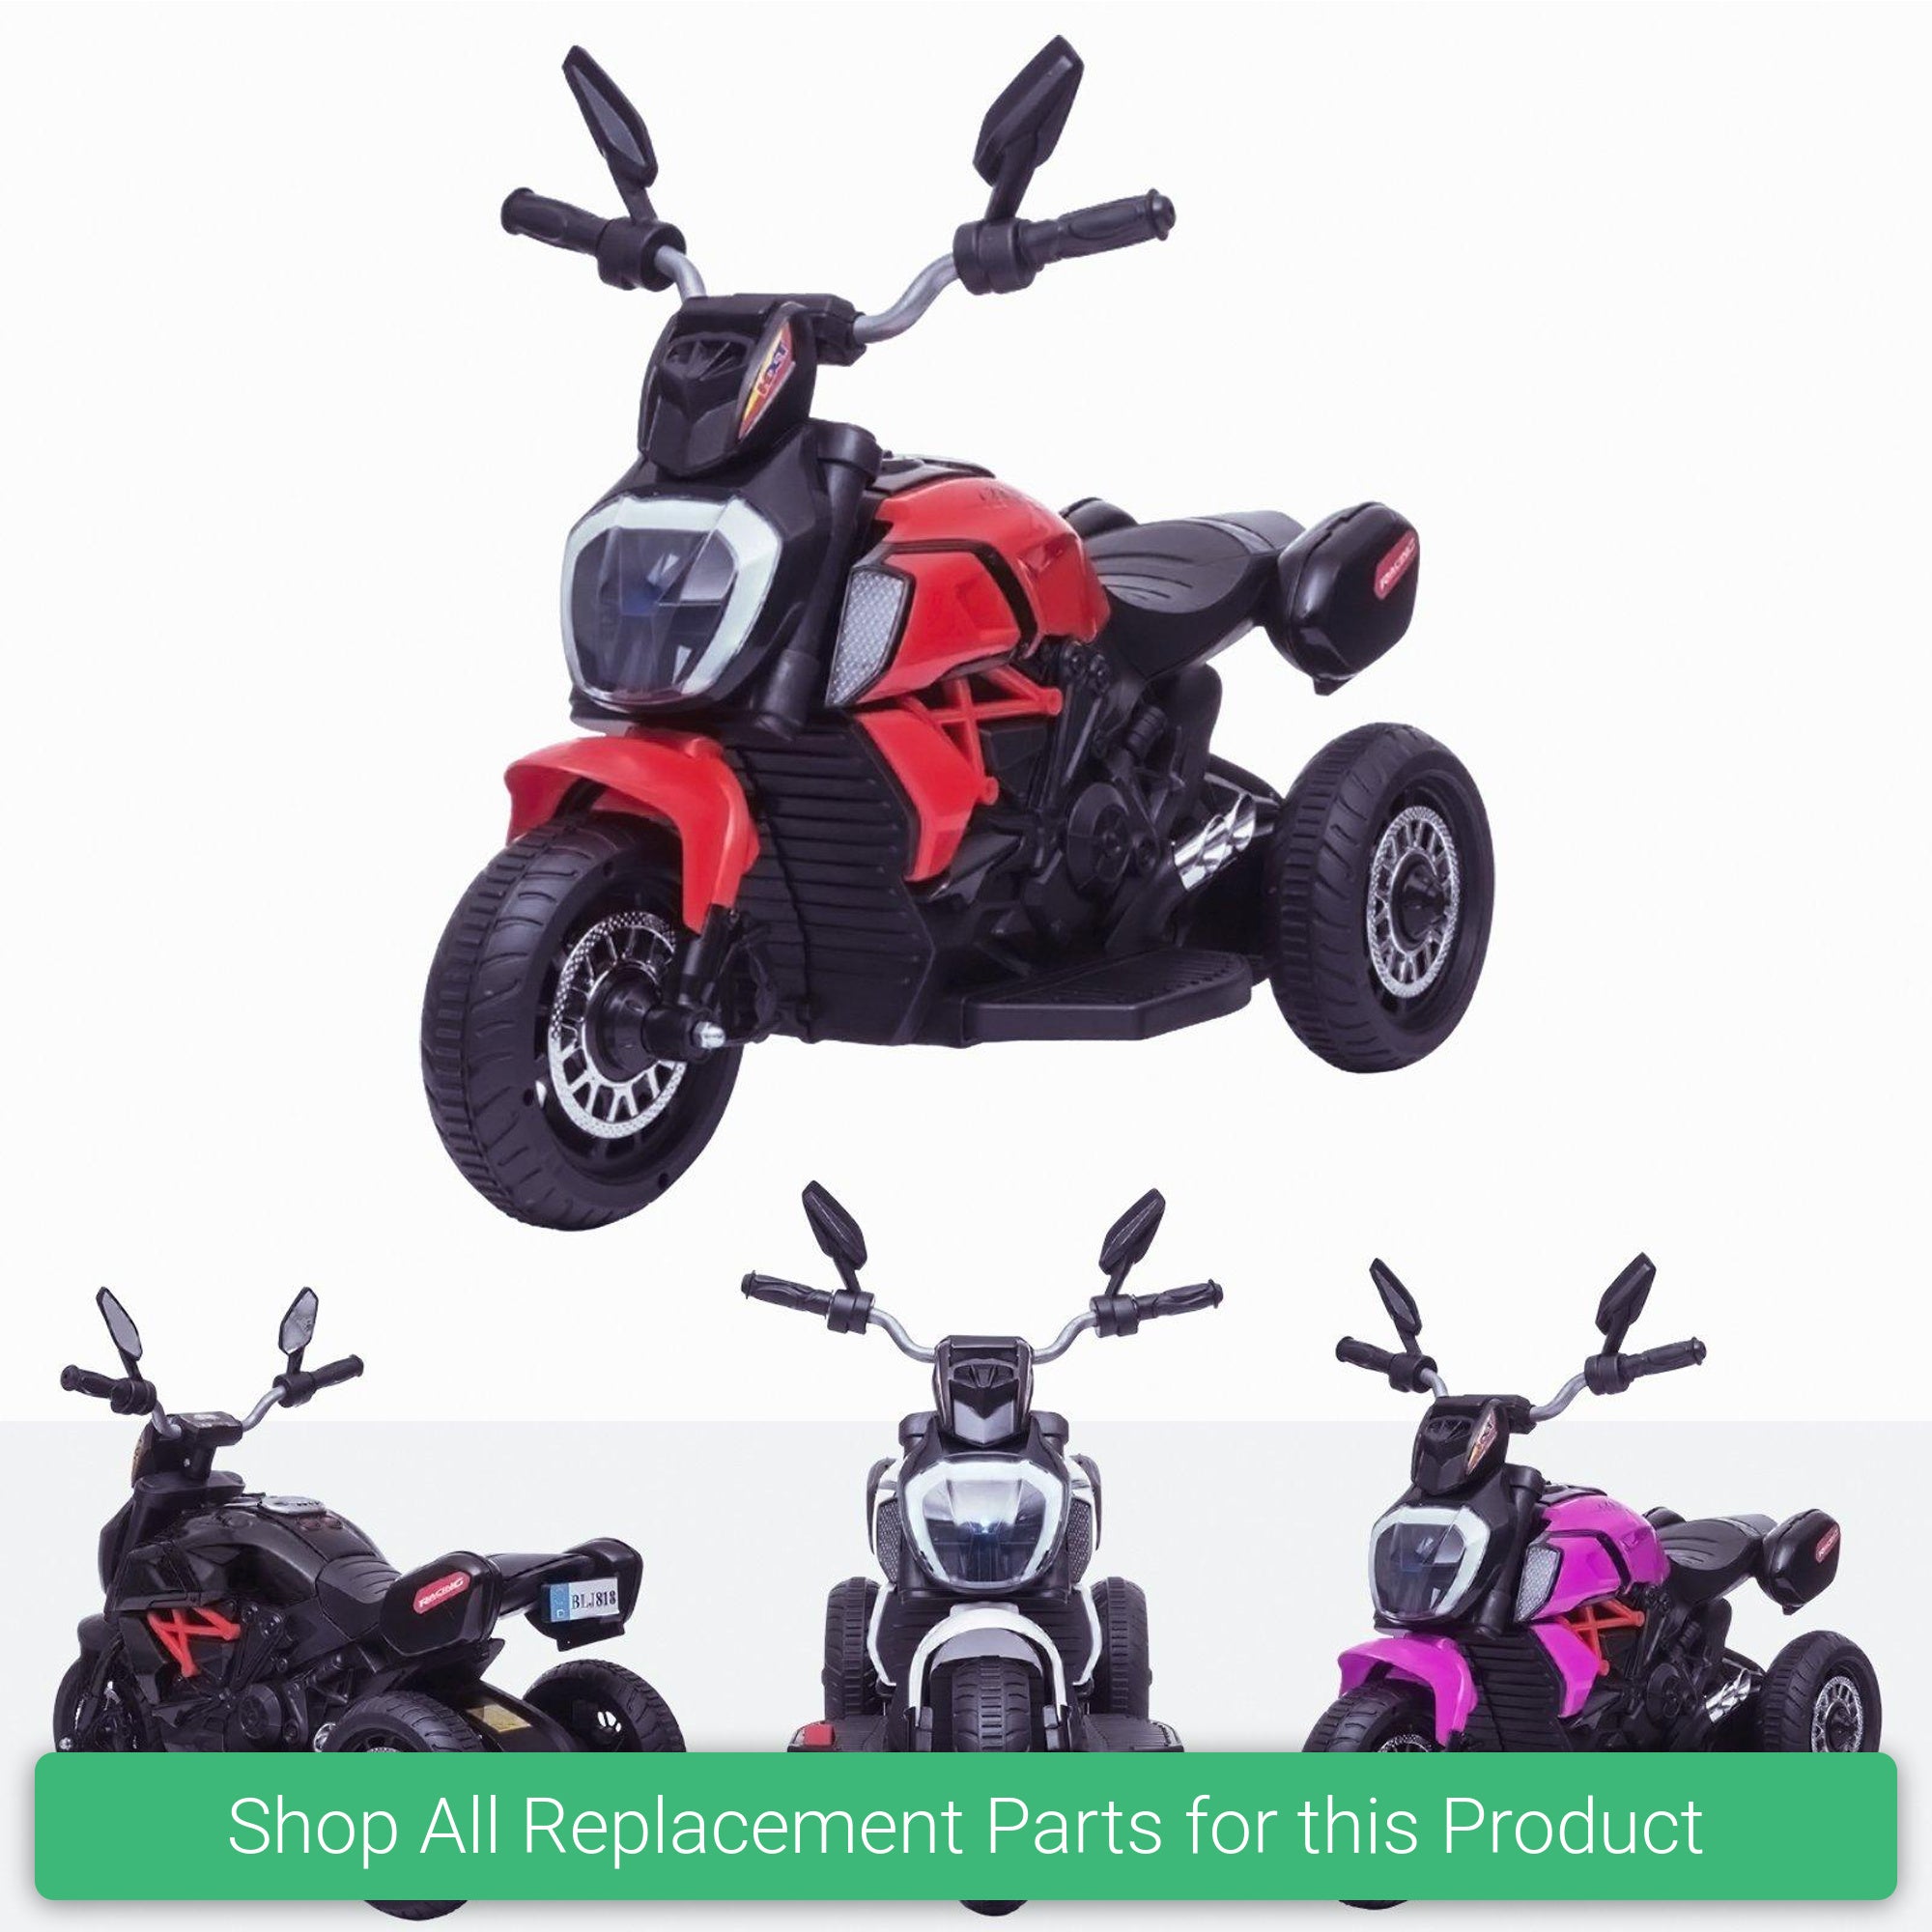 Replacement Parts and Spares for Kids 3 Wheel Motorbike Trick - TRK-3-VARI - BLJ818